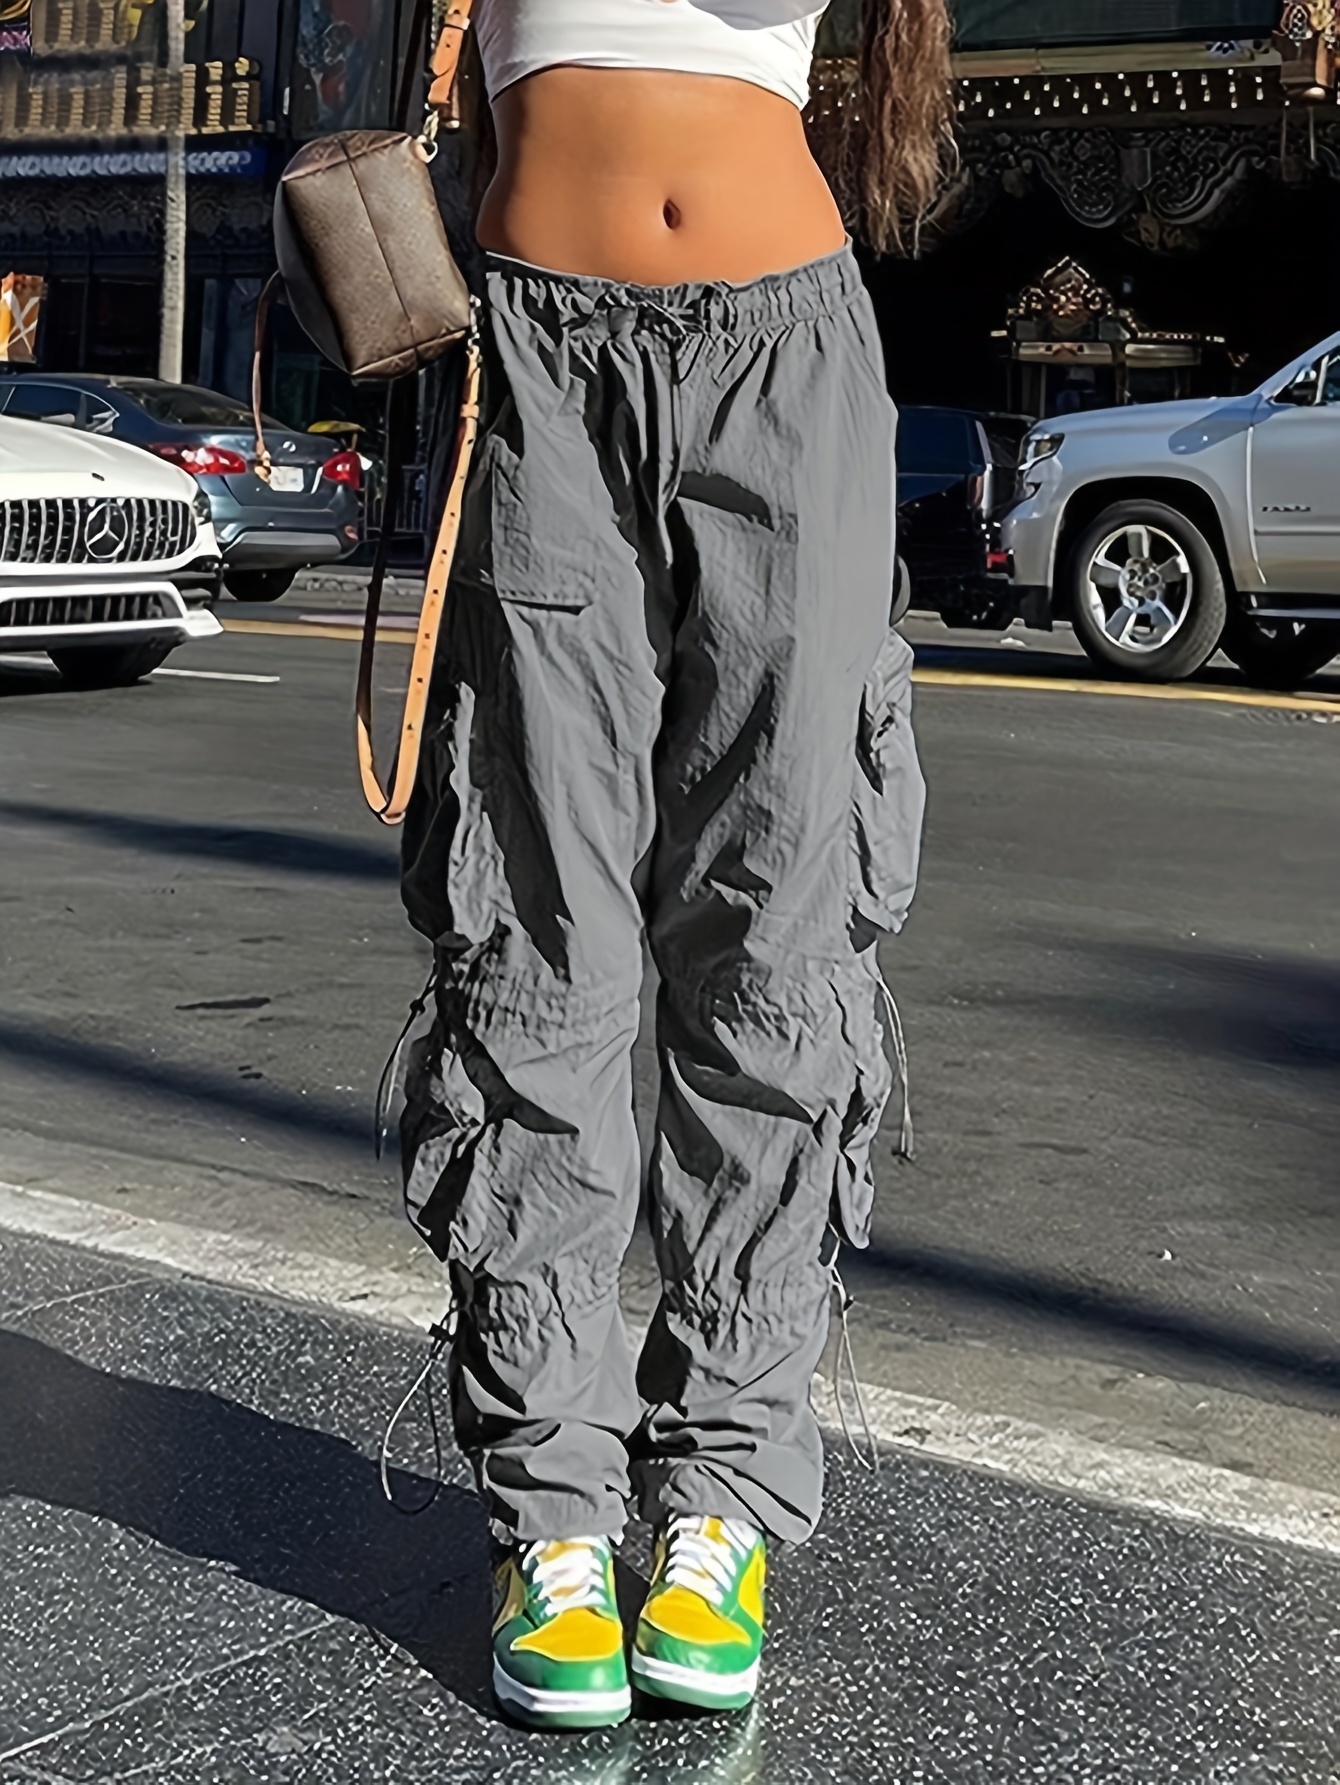 Solid Flap Pocket Drawstring Jogger Pants, Casual Baggy Cargo Pants,  Women's Clothing